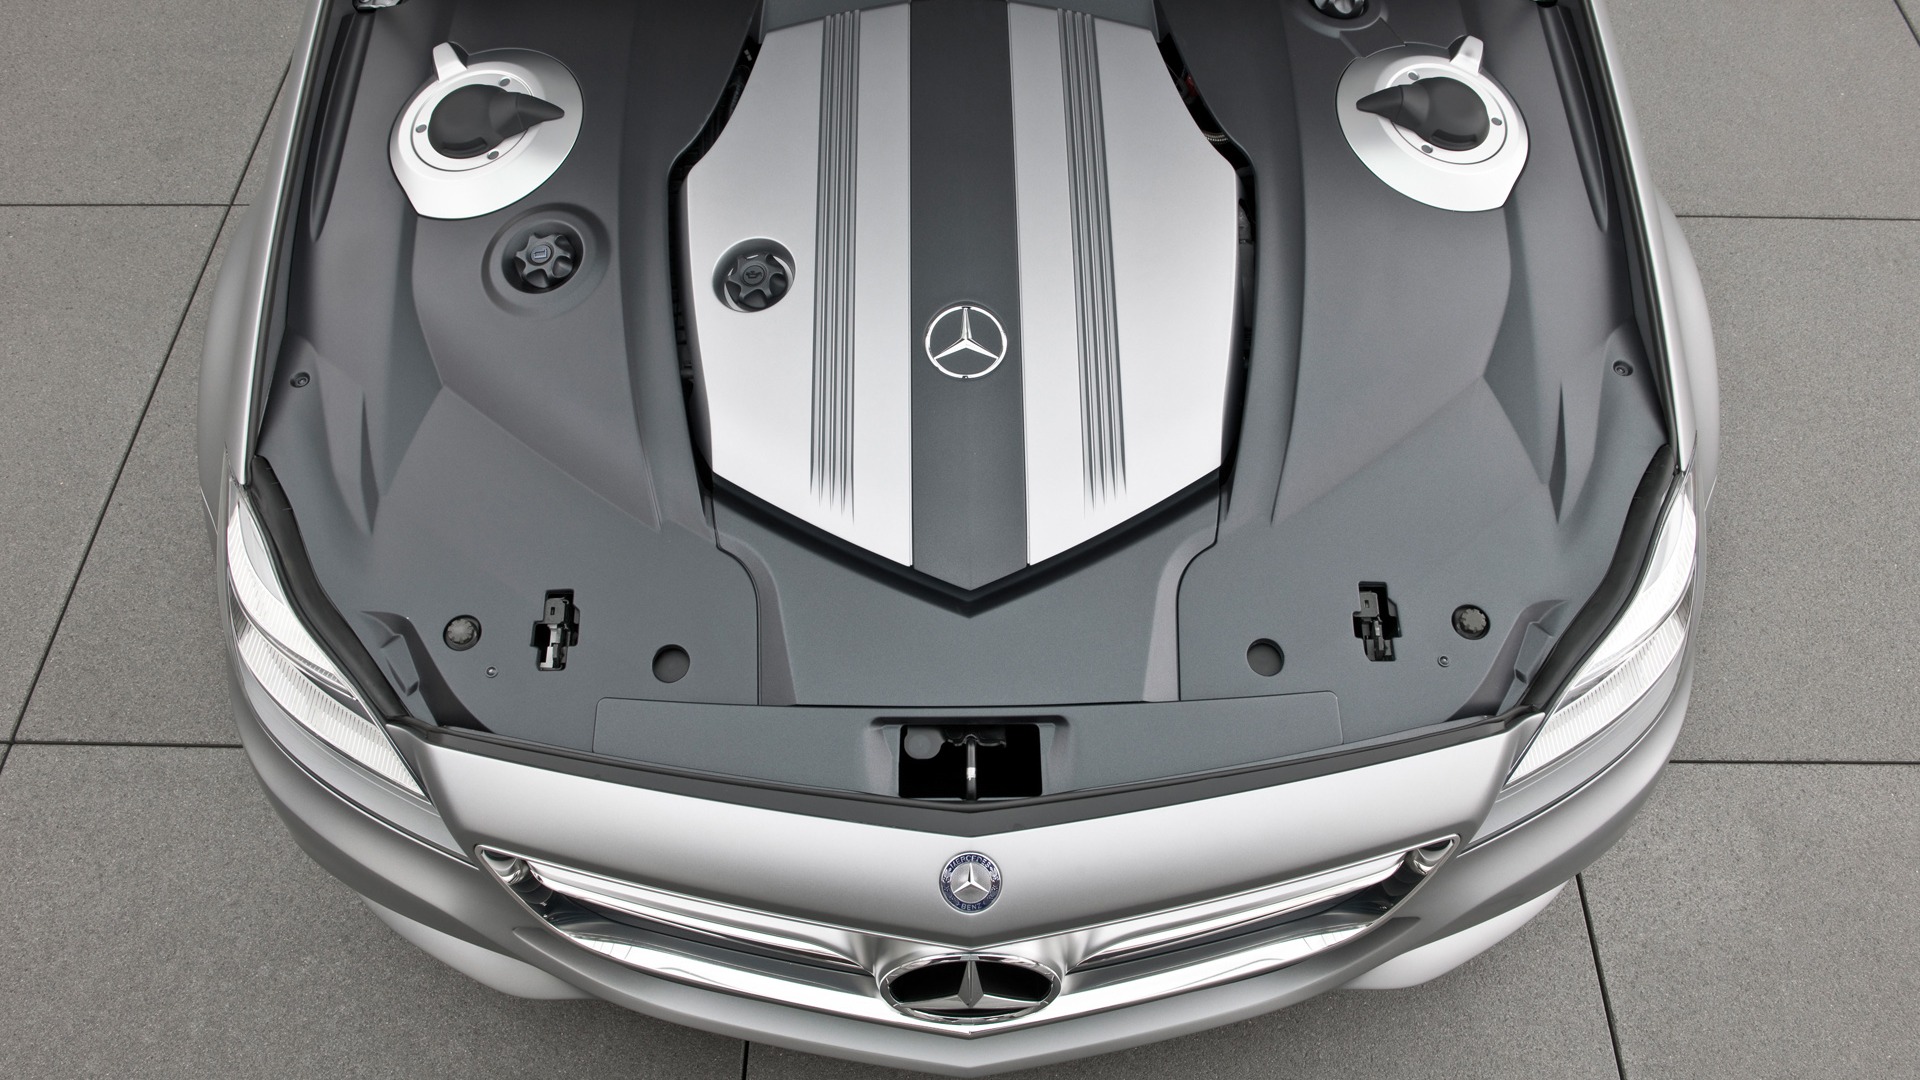 Mercedes-Benz Concept disparo Quiebre - 2010 fondos de escritorio de alta definición #21 - 1920x1080